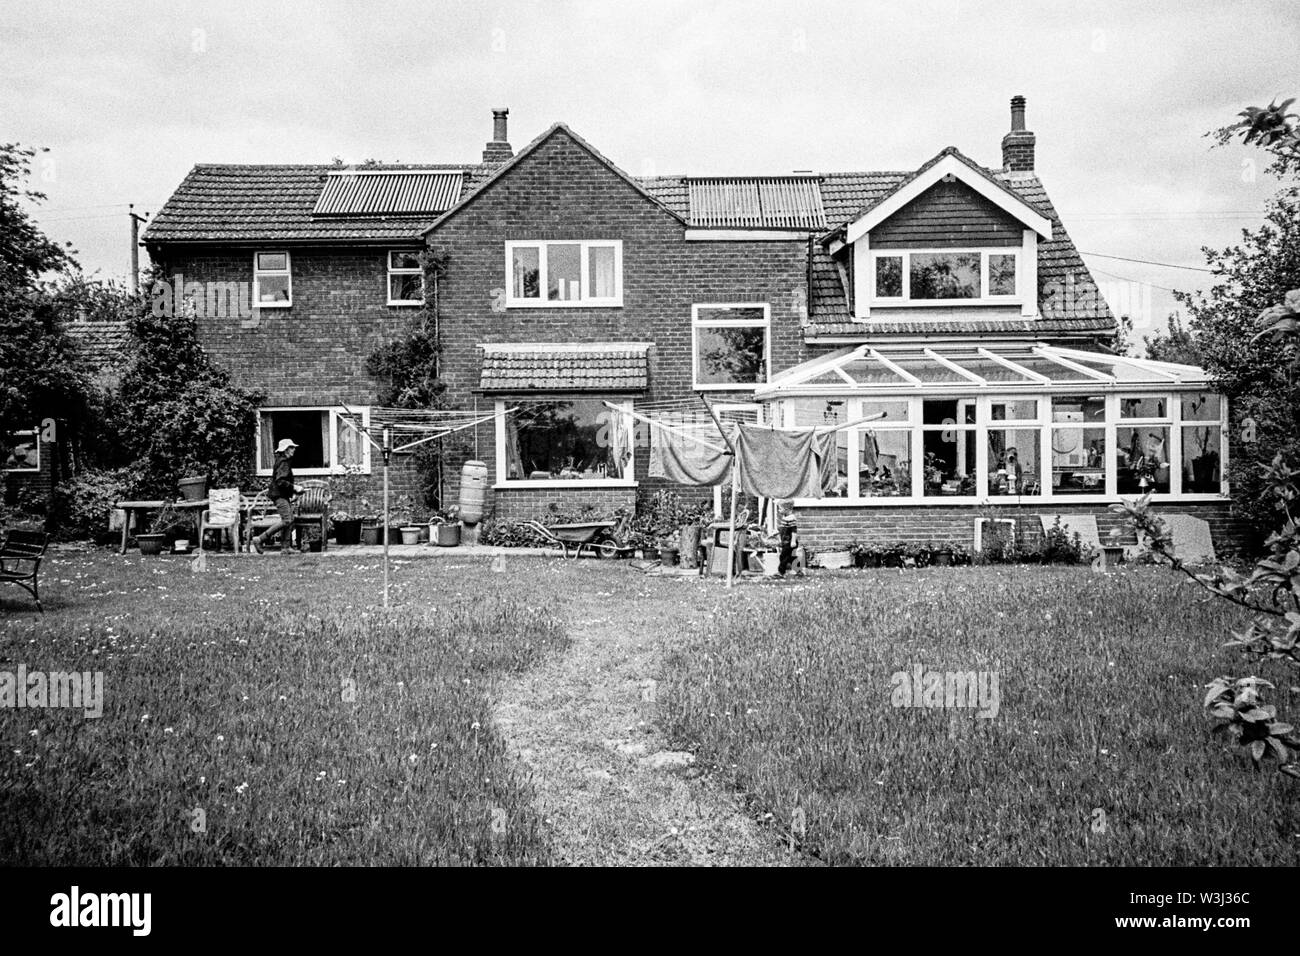 Plum Cottage, Hattingley, Medstead, Alton, Hampshire, England, United Kingdom. Stock Photo